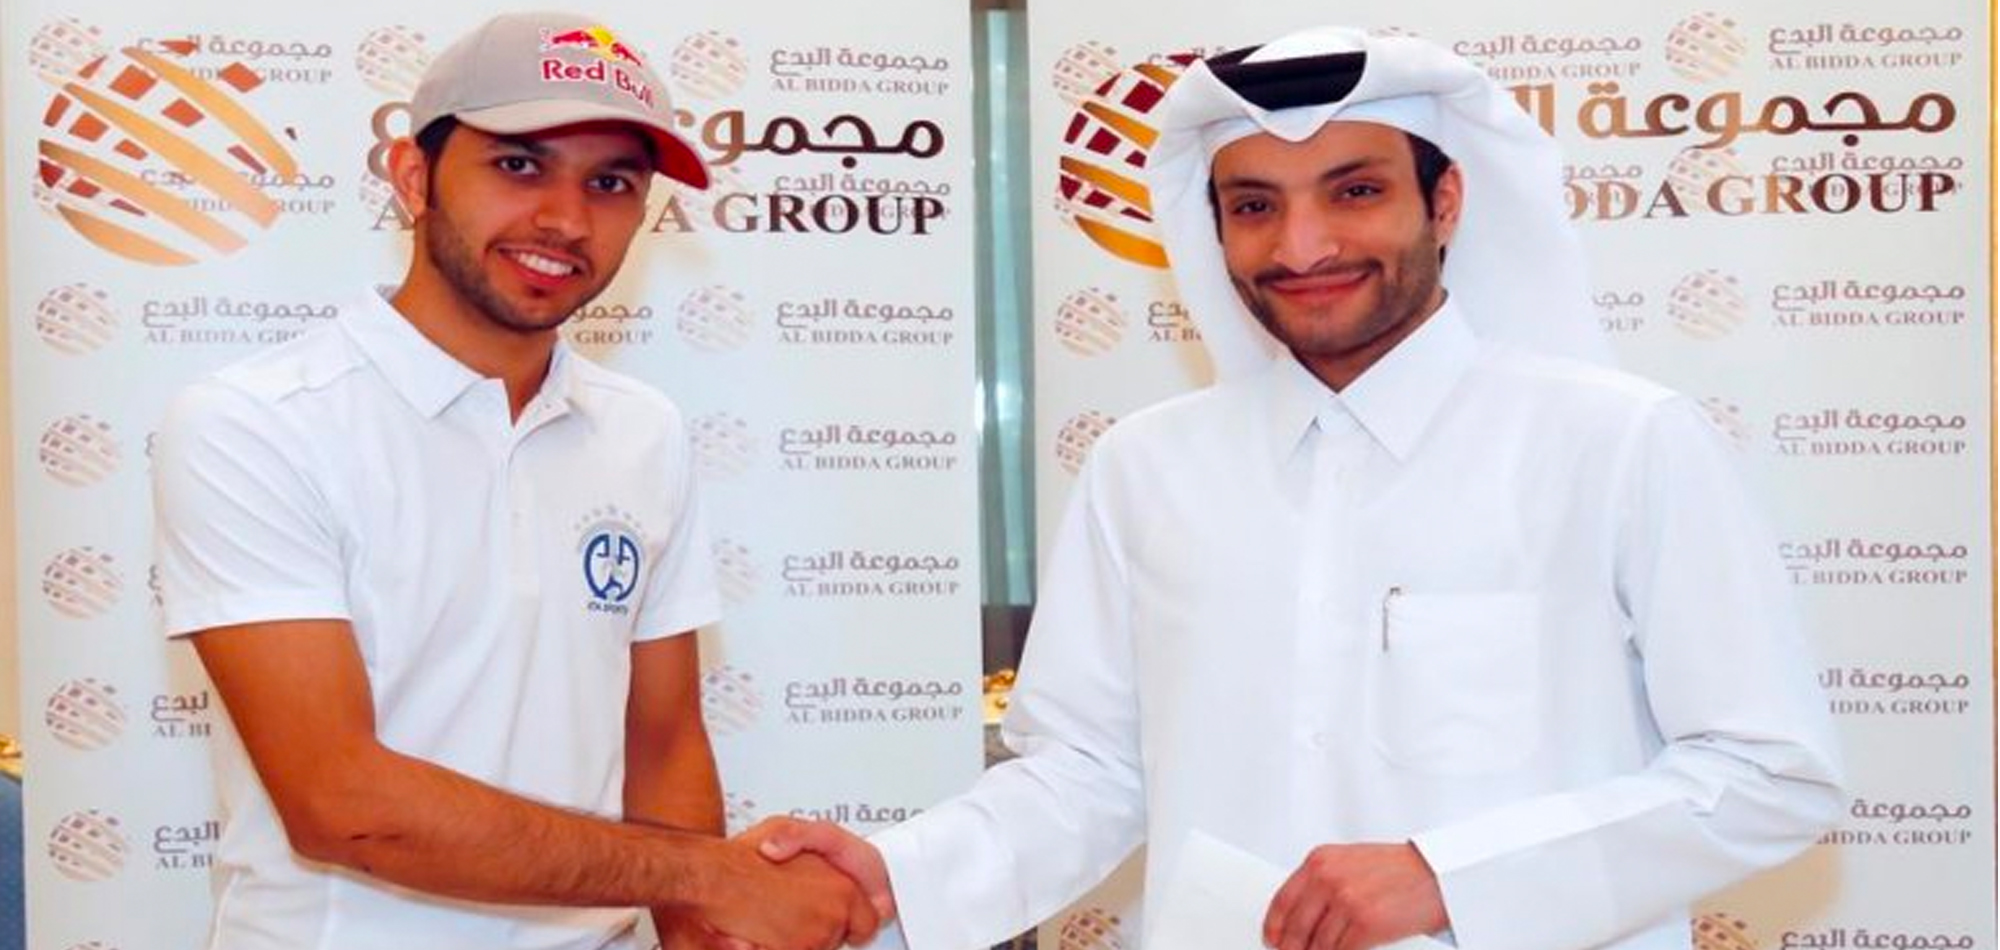 Al Bidda Group signs two-year sponsorship deal with Tamimi